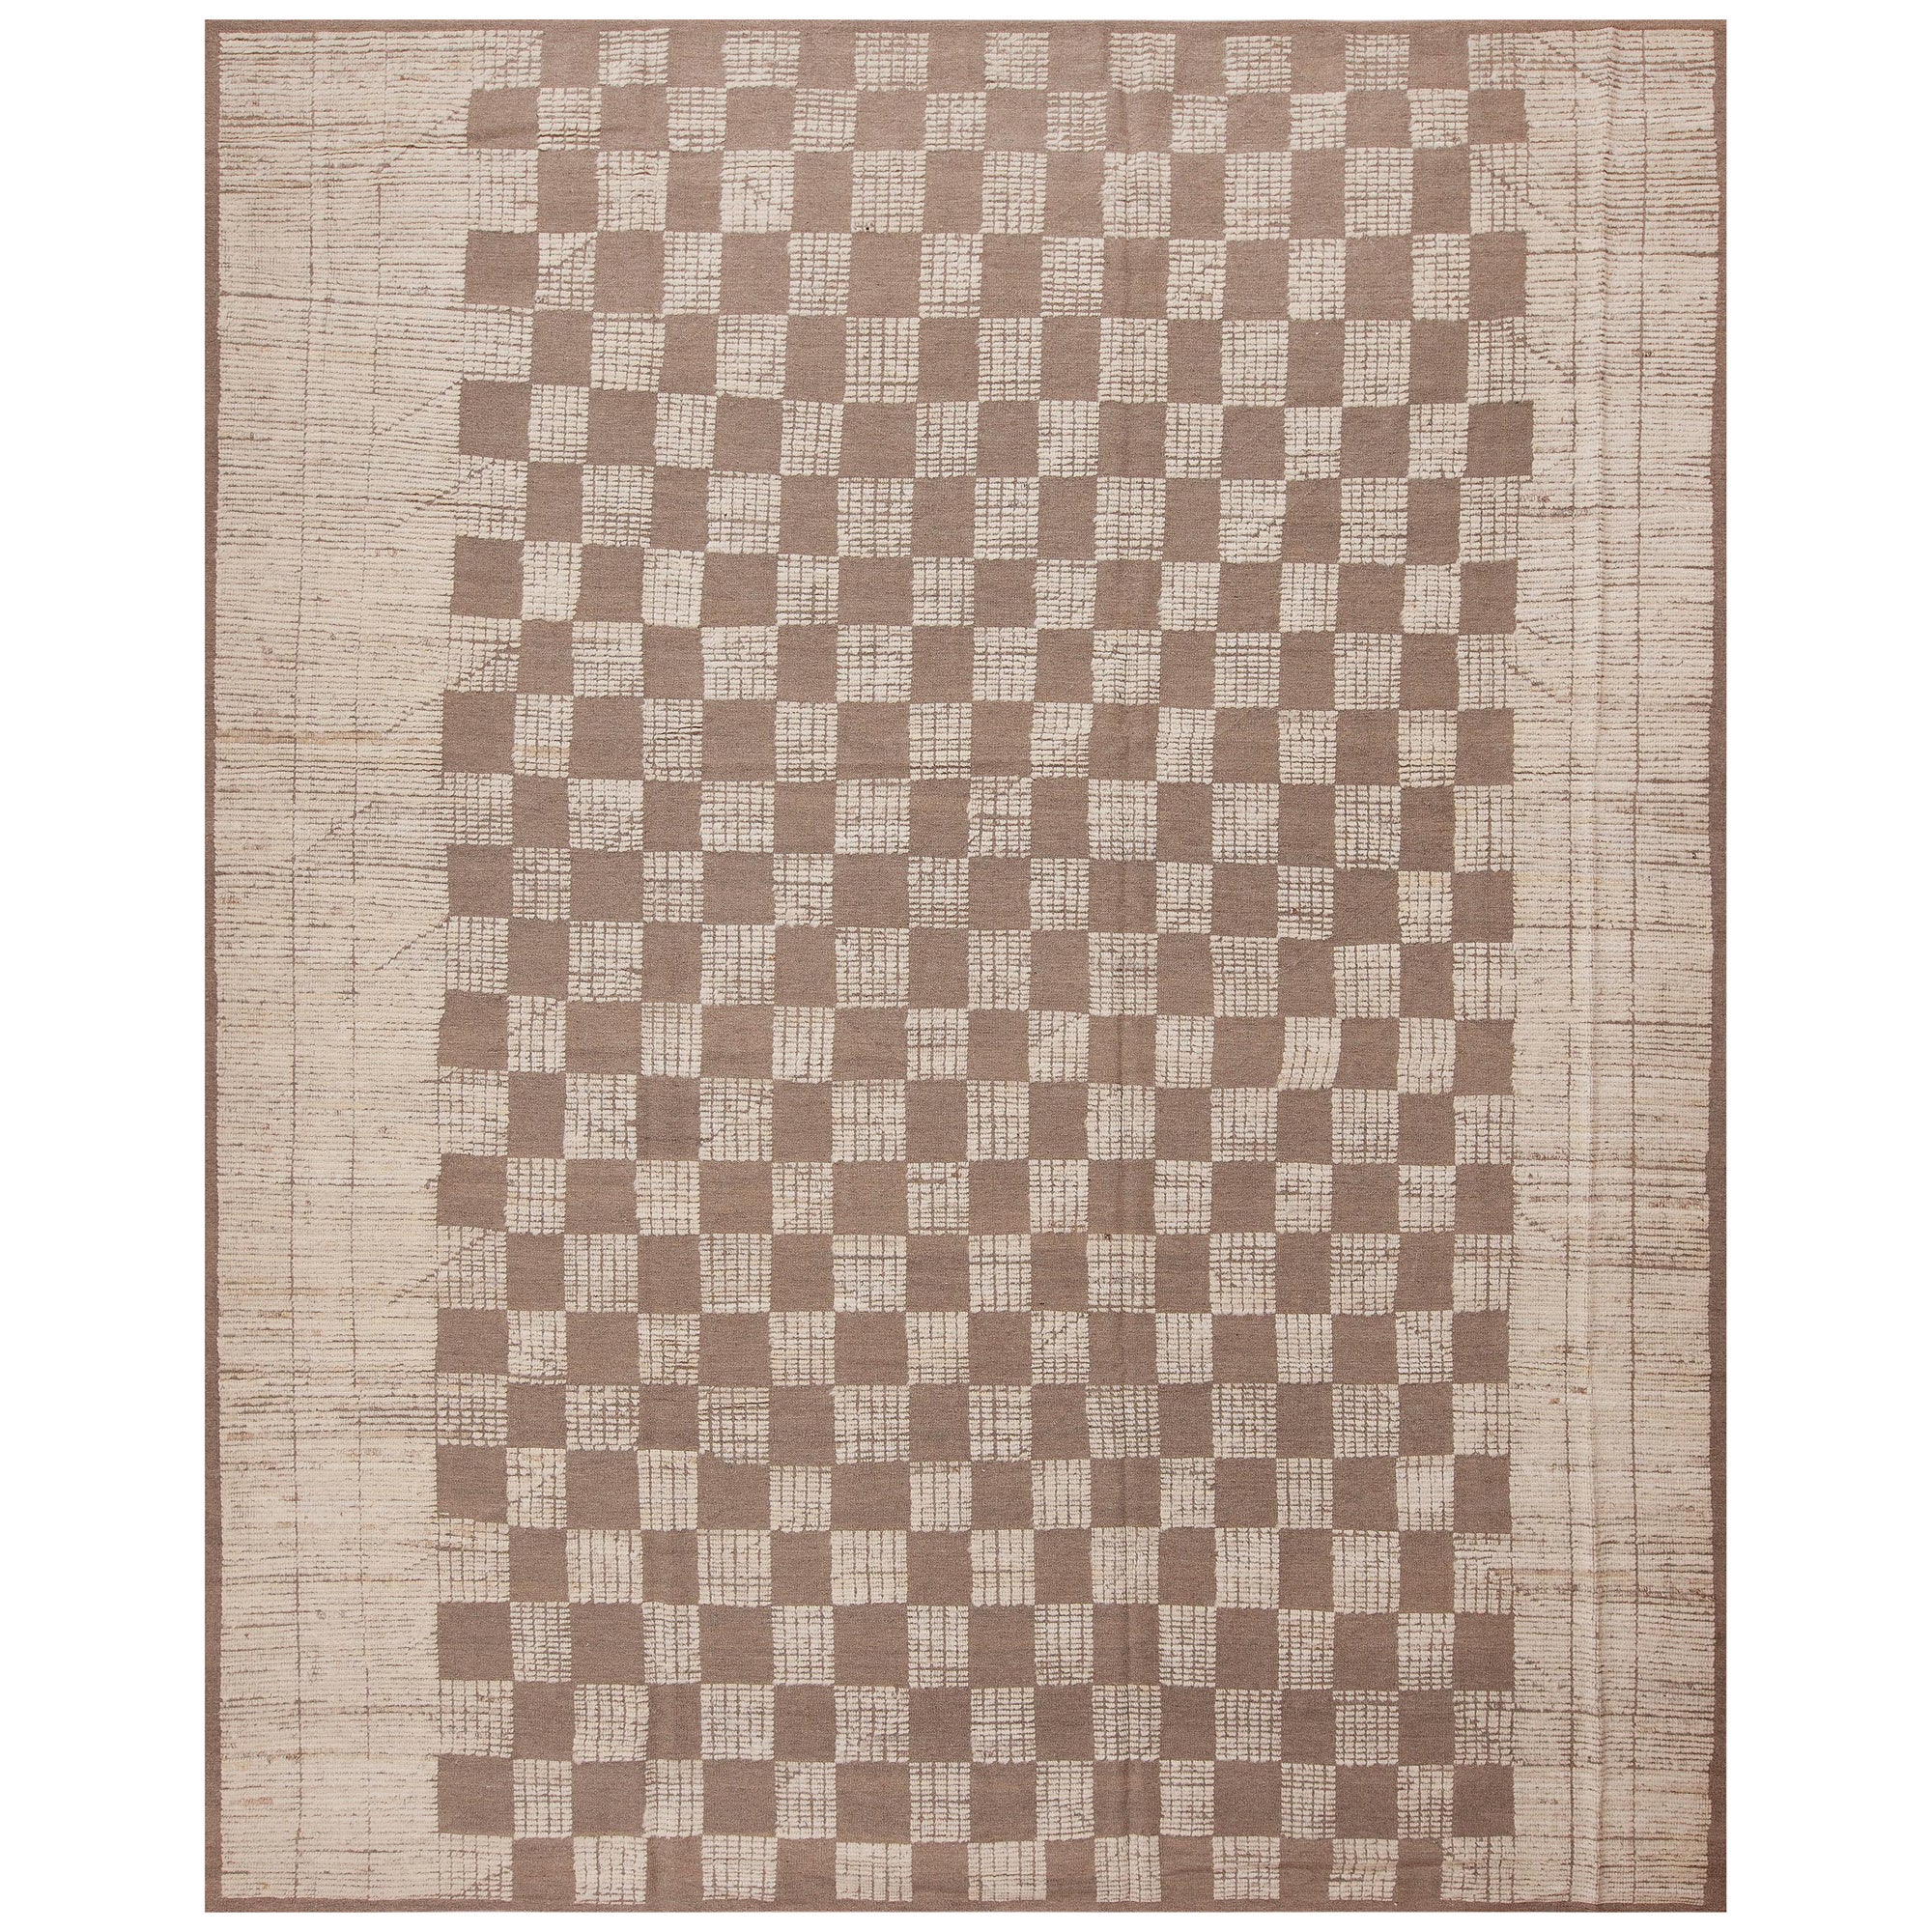 Nazmiyal Collection Brown Brown Tribal Checkerboard Design Modern Rug 10'8" x 13' (tapis moderne à carreaux tribaux)